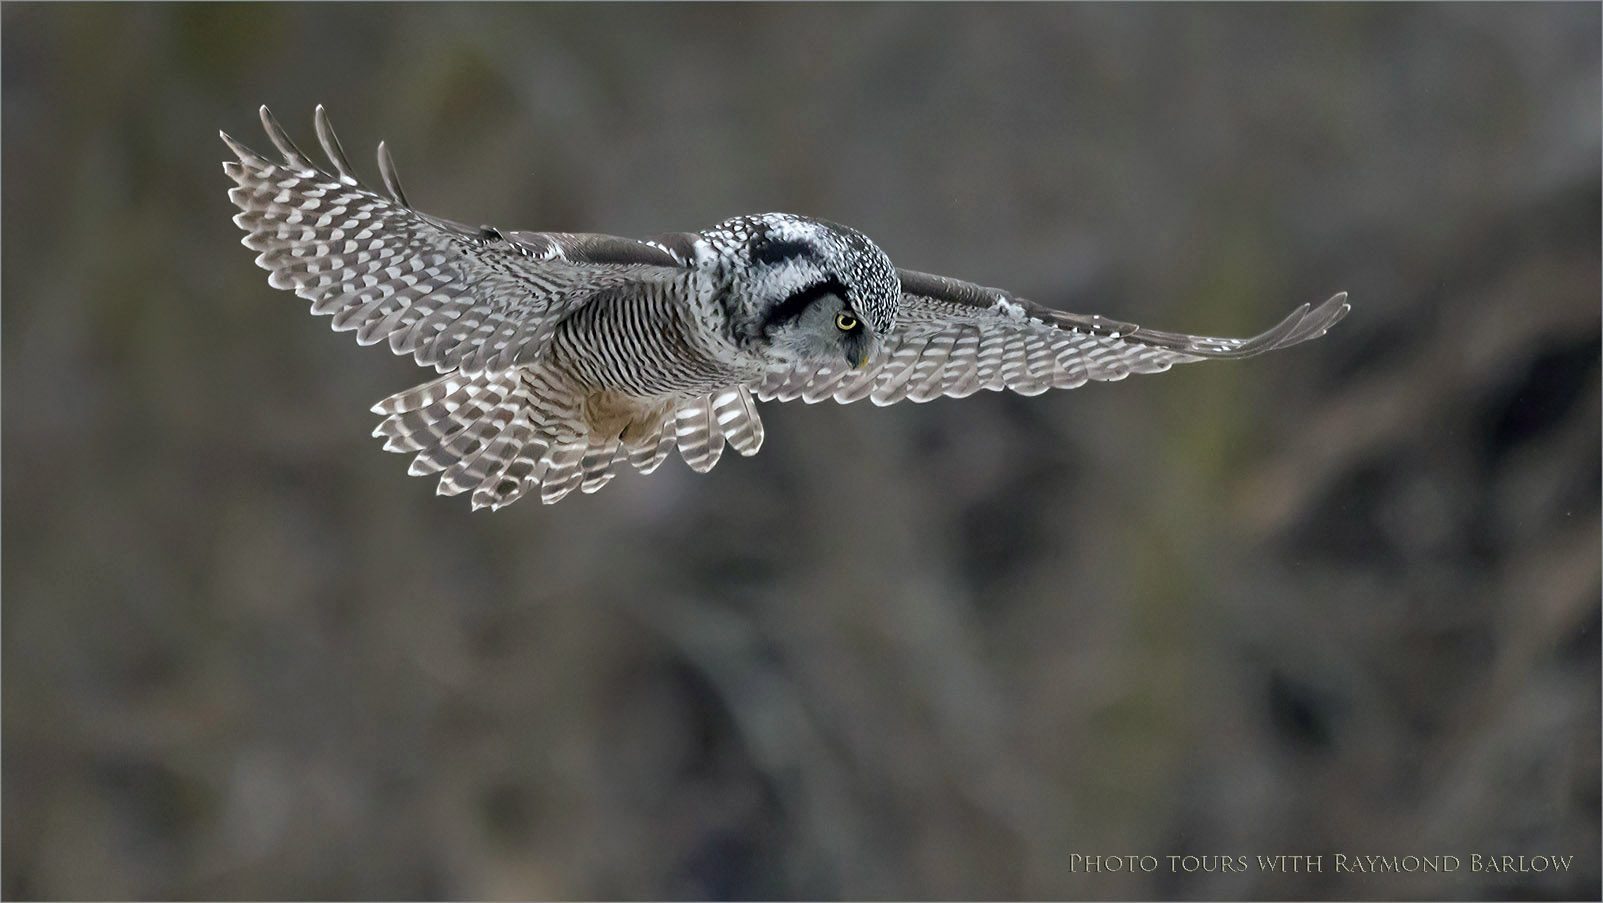 7R404525 Northern hawk Owl Hovering 1-2 1600 share   .jpg